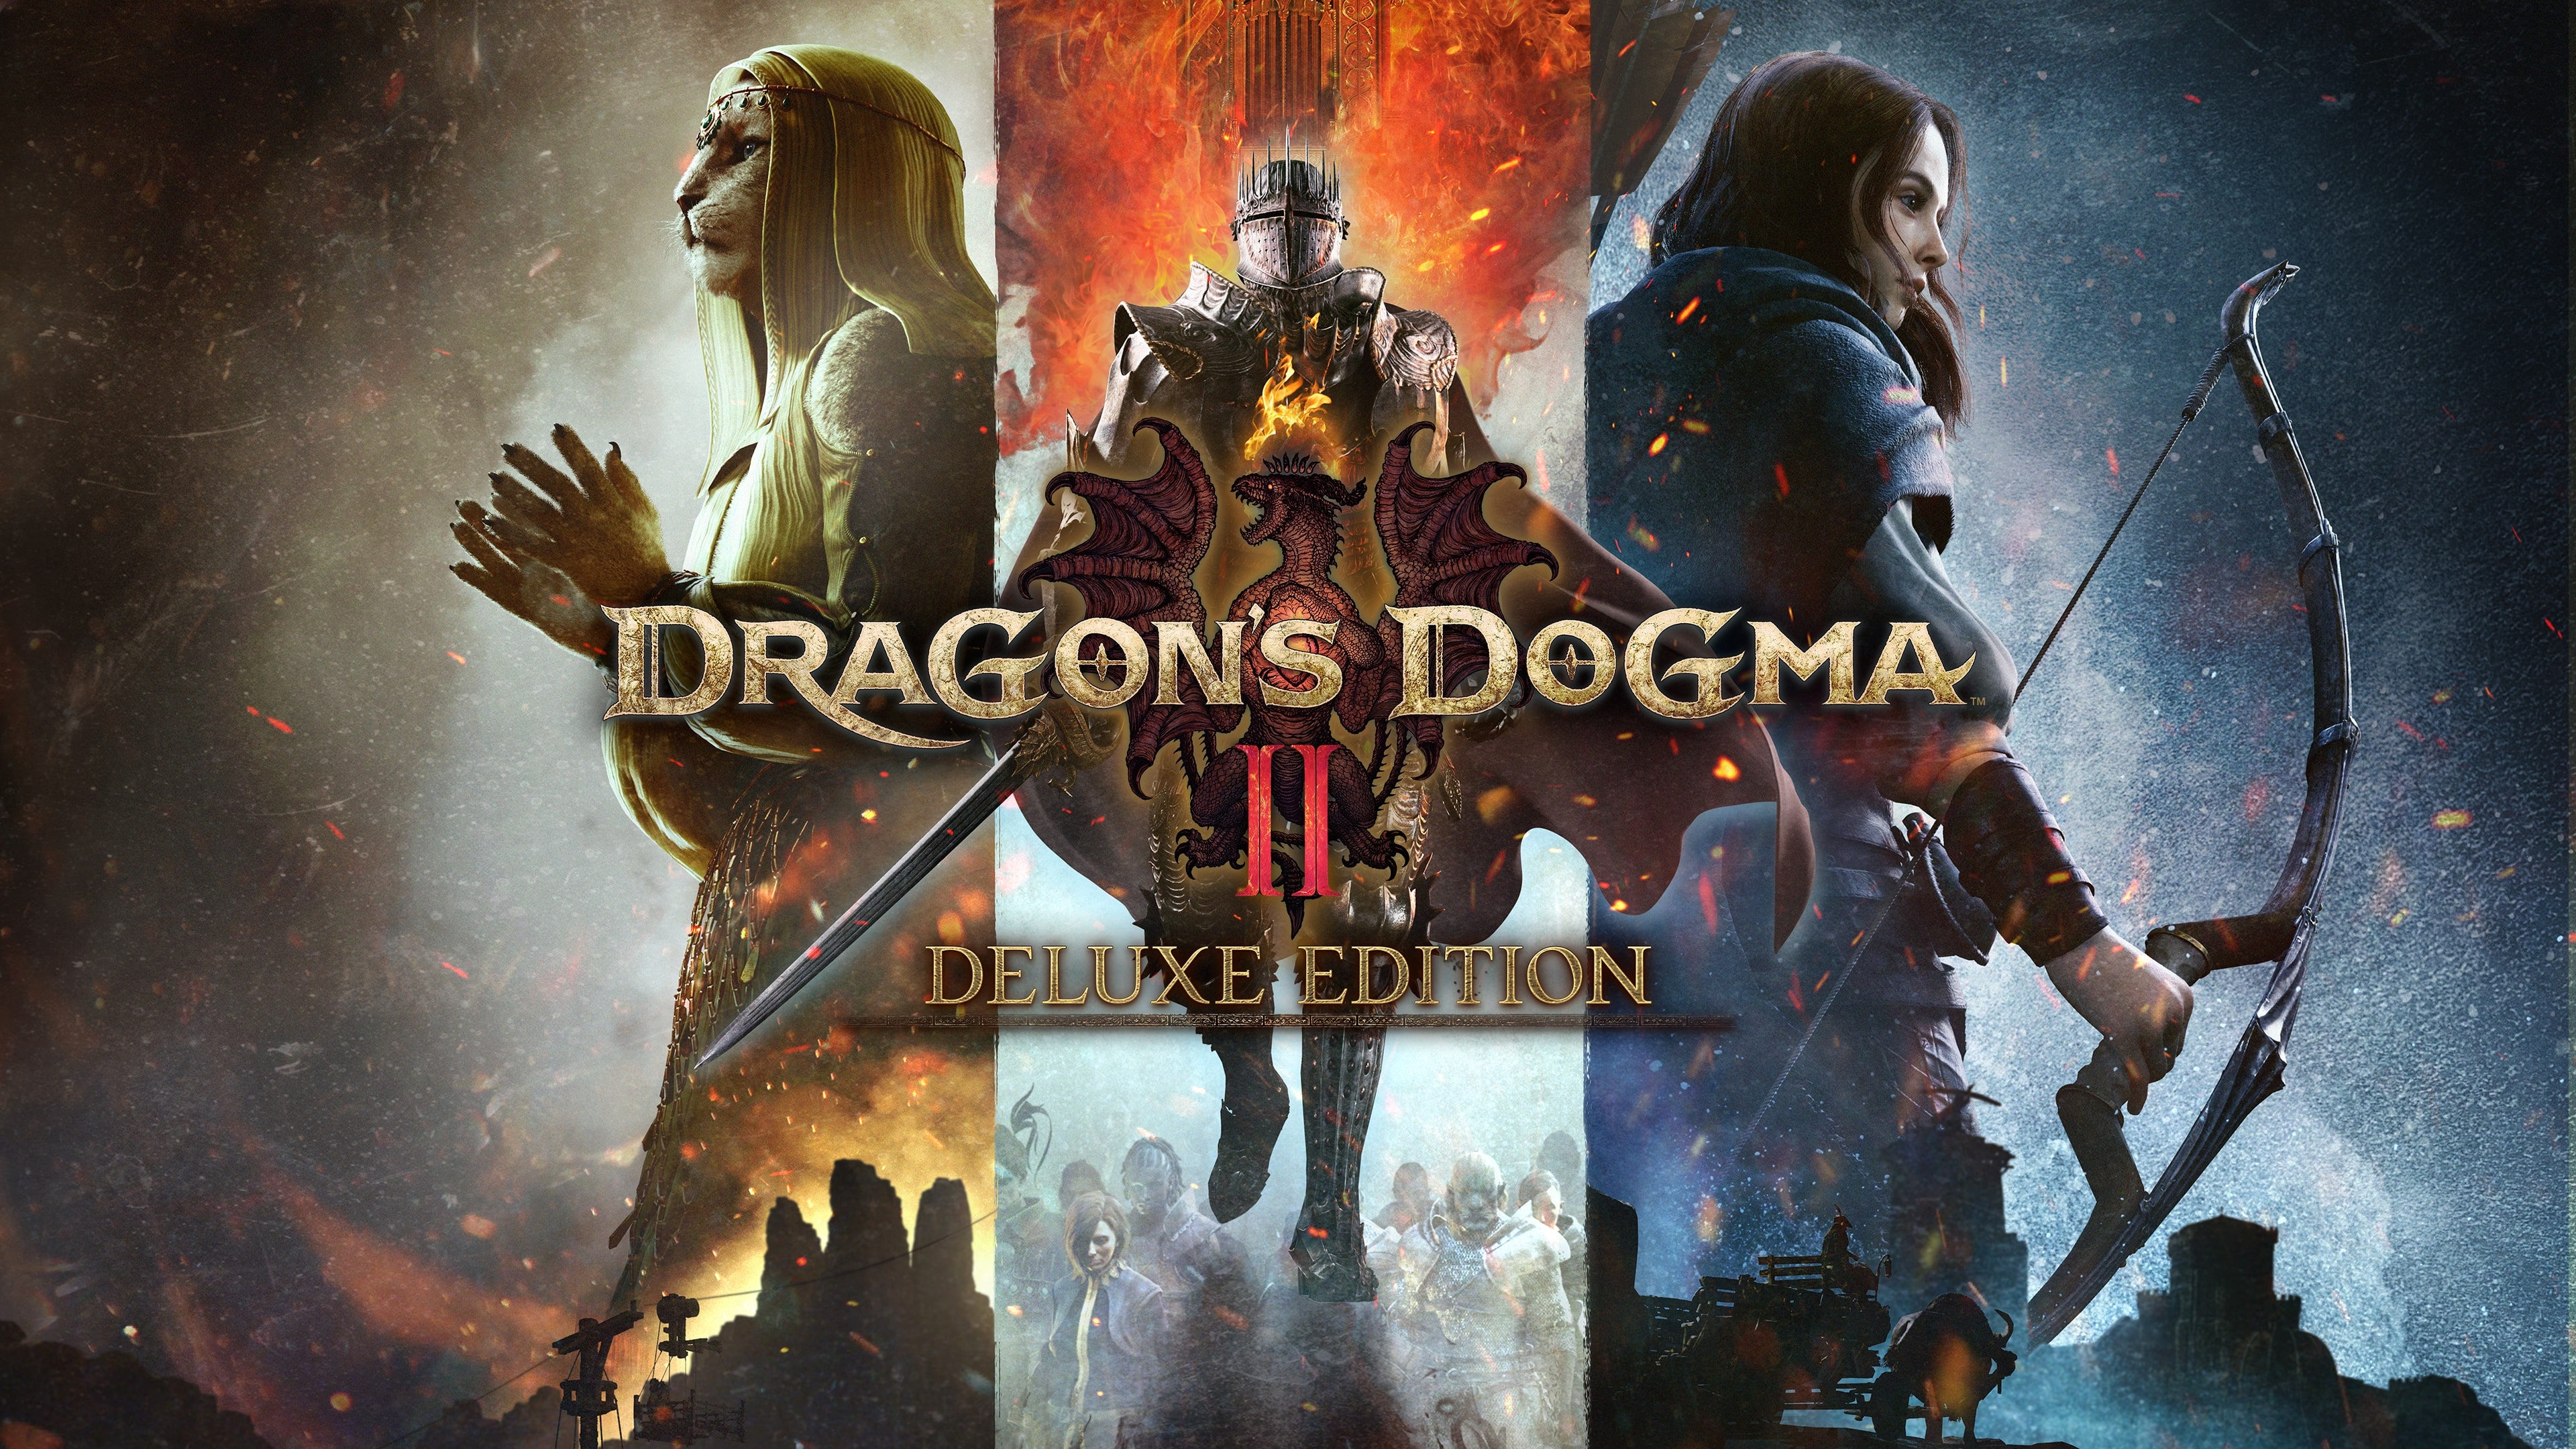 Dragons dogma 2 series s